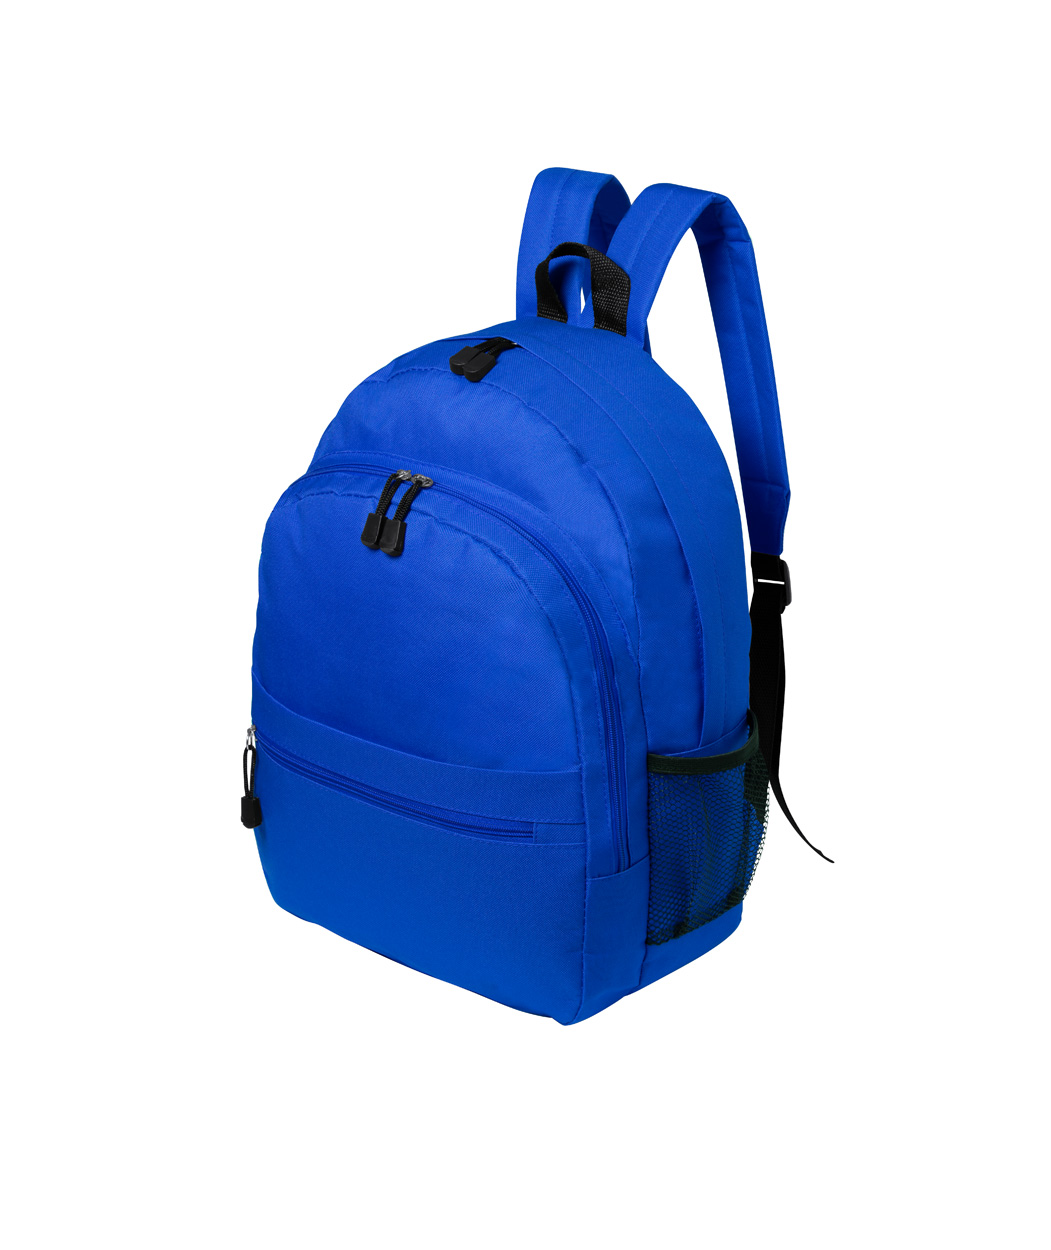 Promo  Ventix backpack